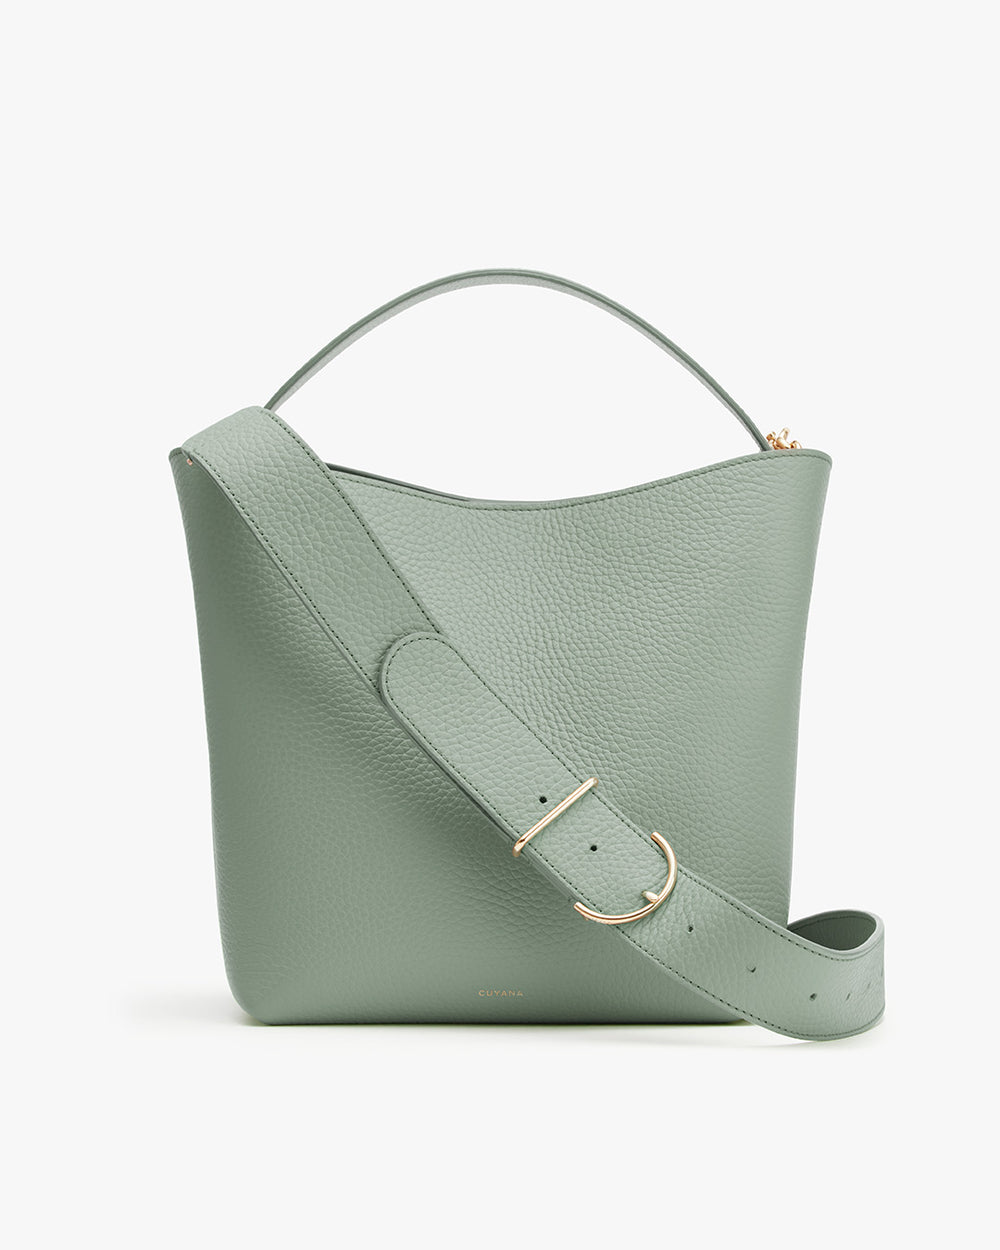 Handbag with a handle and an adjustable shoulder strap.